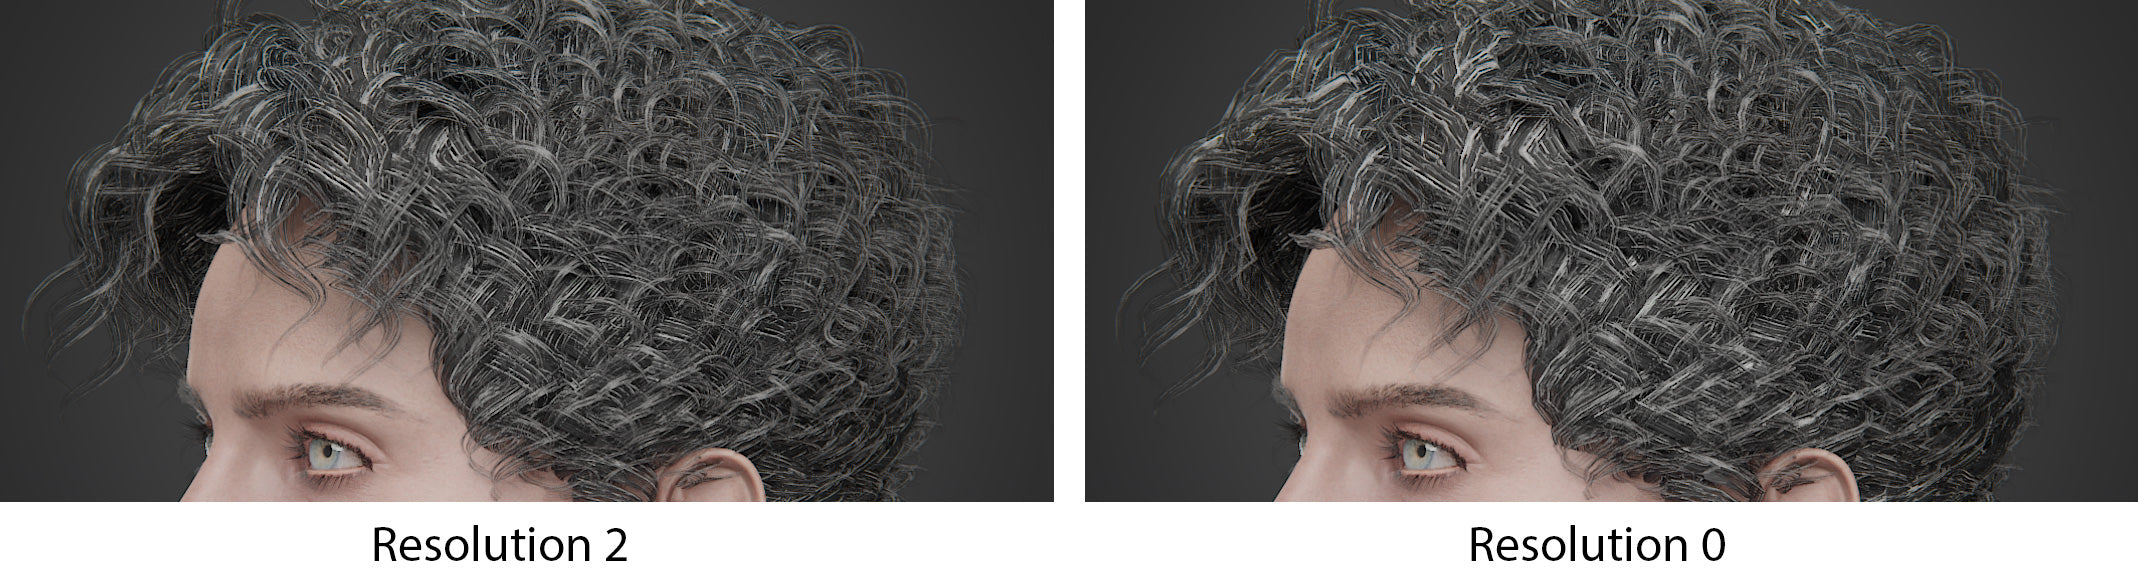 Transhuman4Blender mesh hair resolution comparison